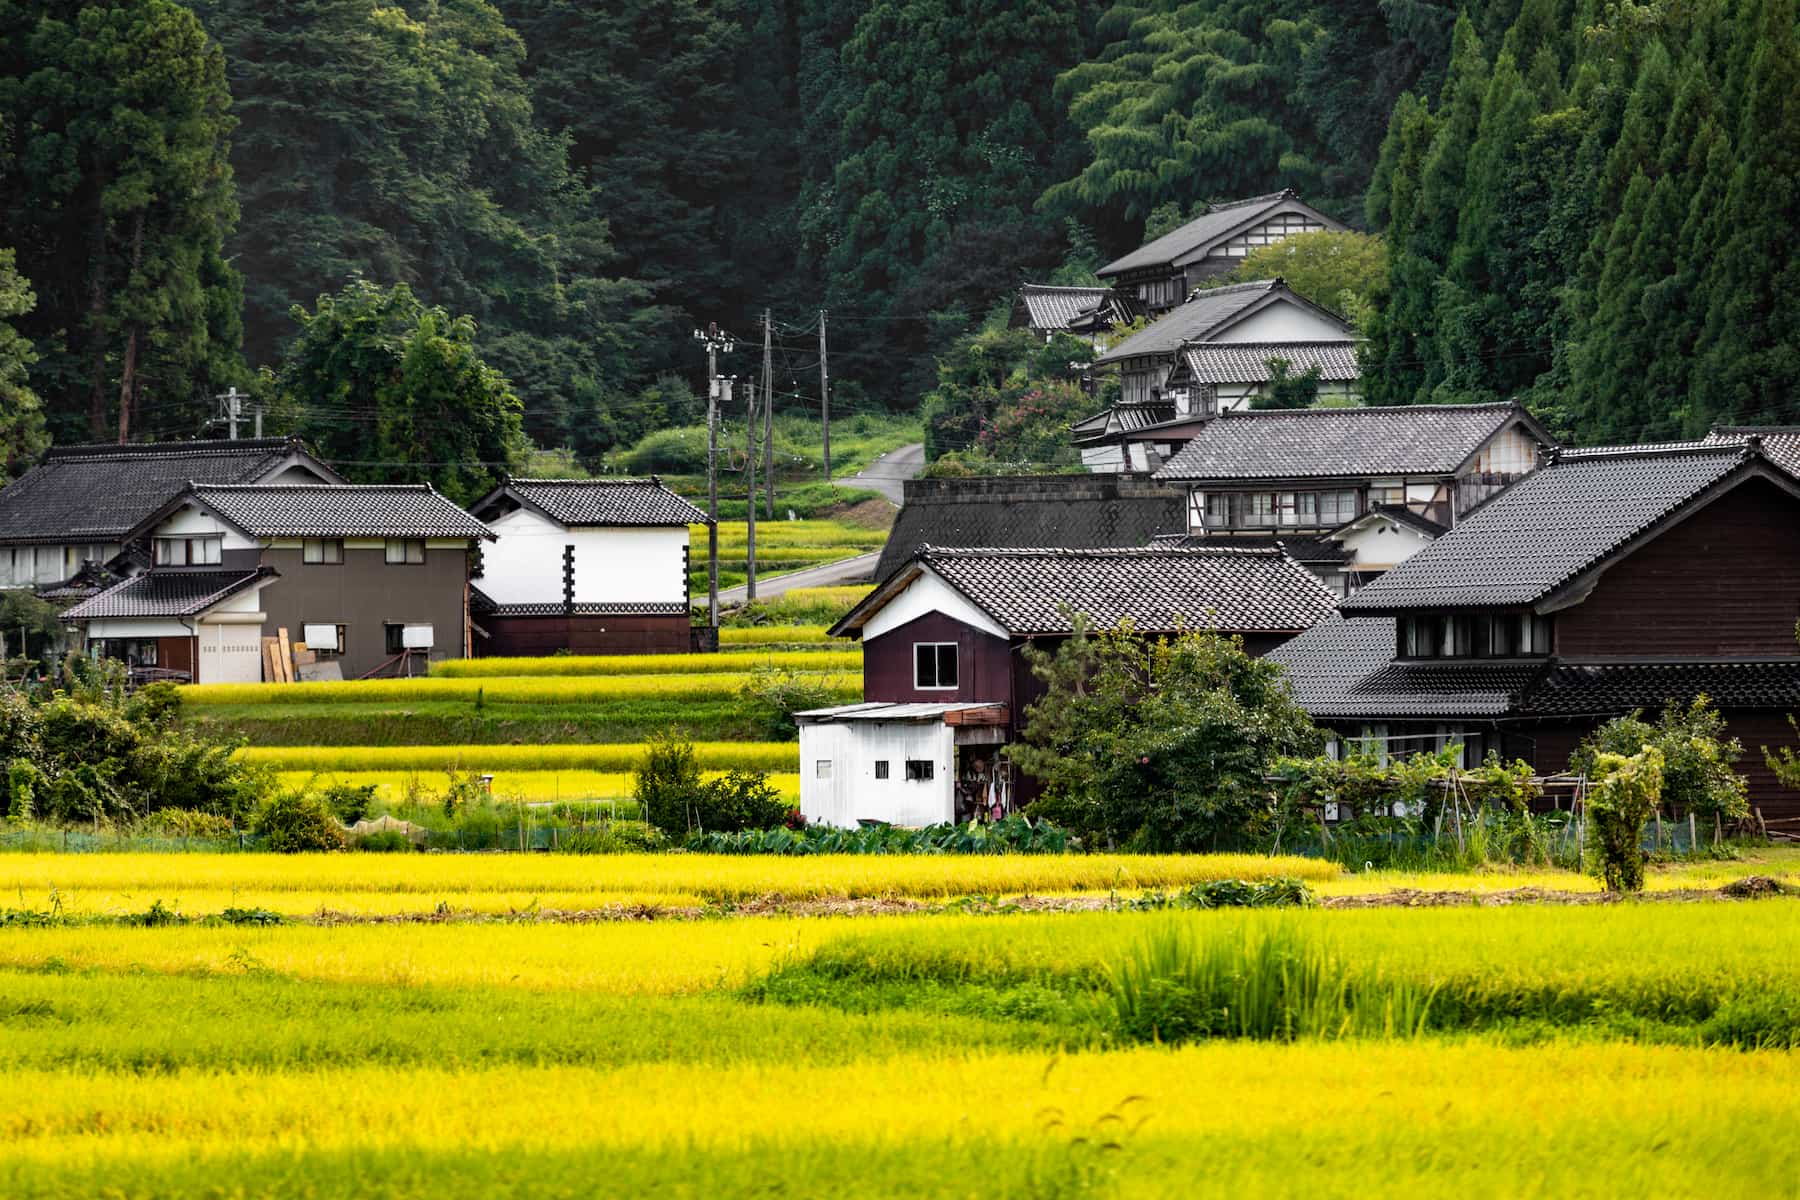 Traditional farmhouses dot the countryside throughout the Ishikawa Prefecture. Photo courtesy of Ishikawa Travel JP.